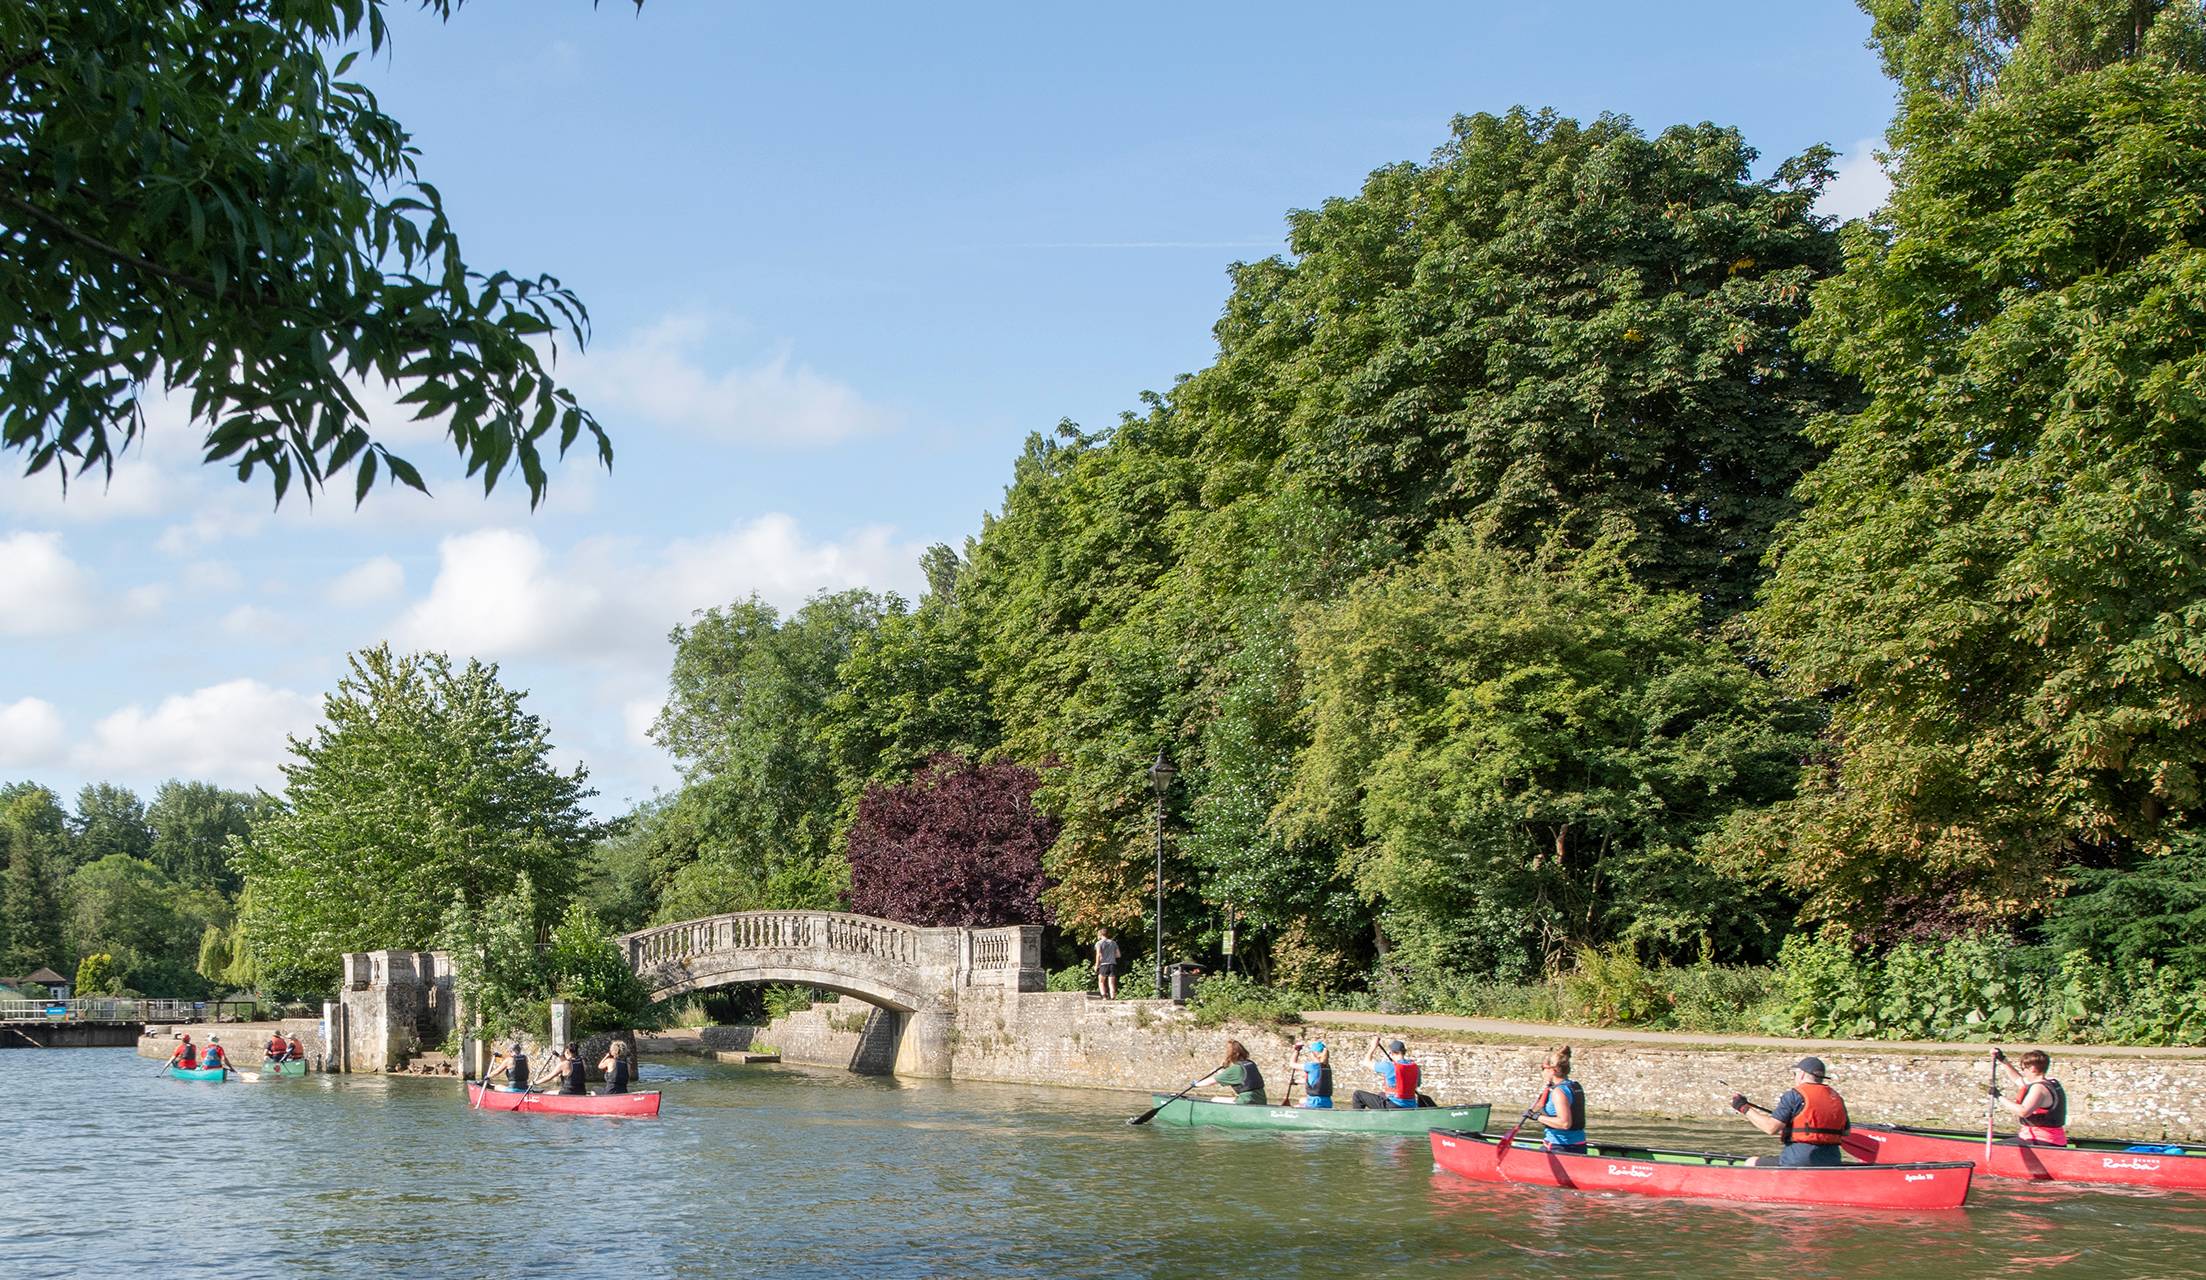 Kayaks on a river